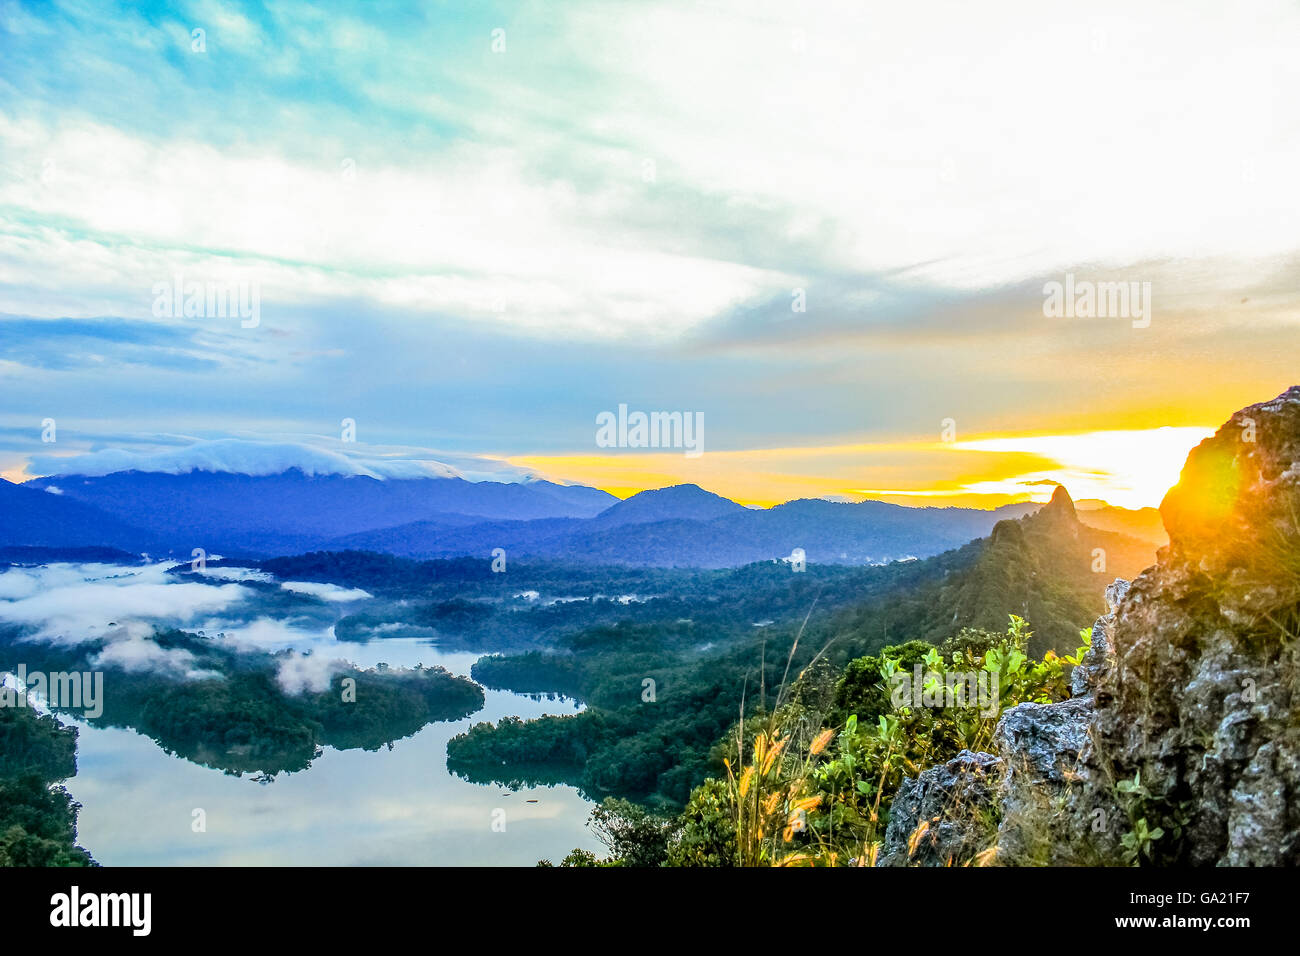 Sunrise at bukit tabur malaysia Stock Photo